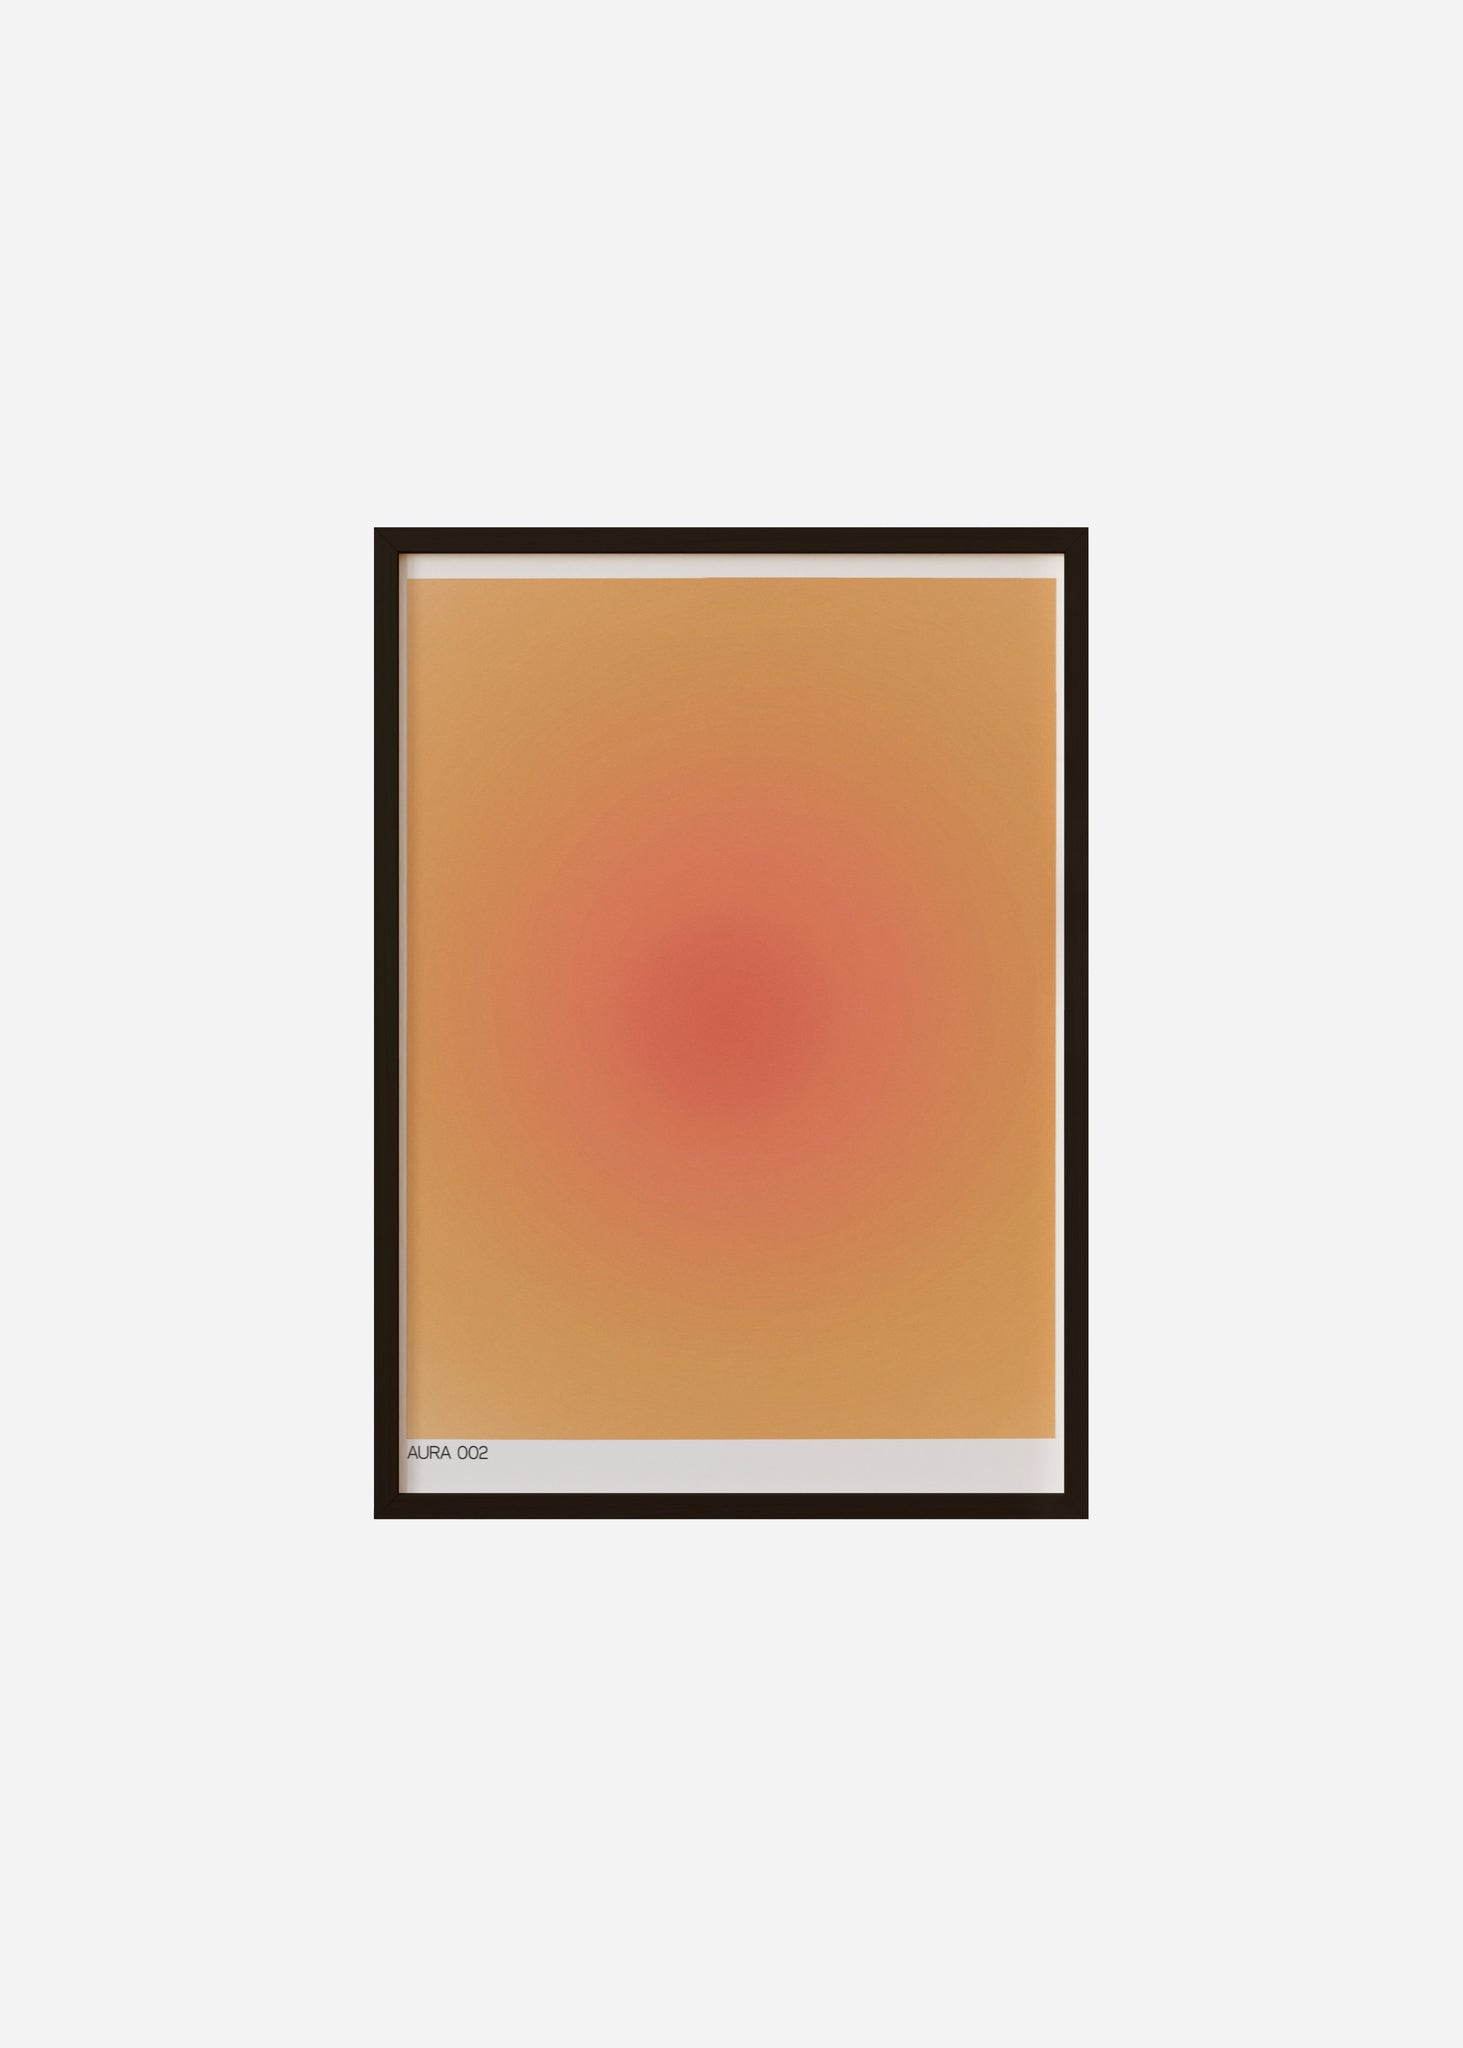 aura 002 Framed Print